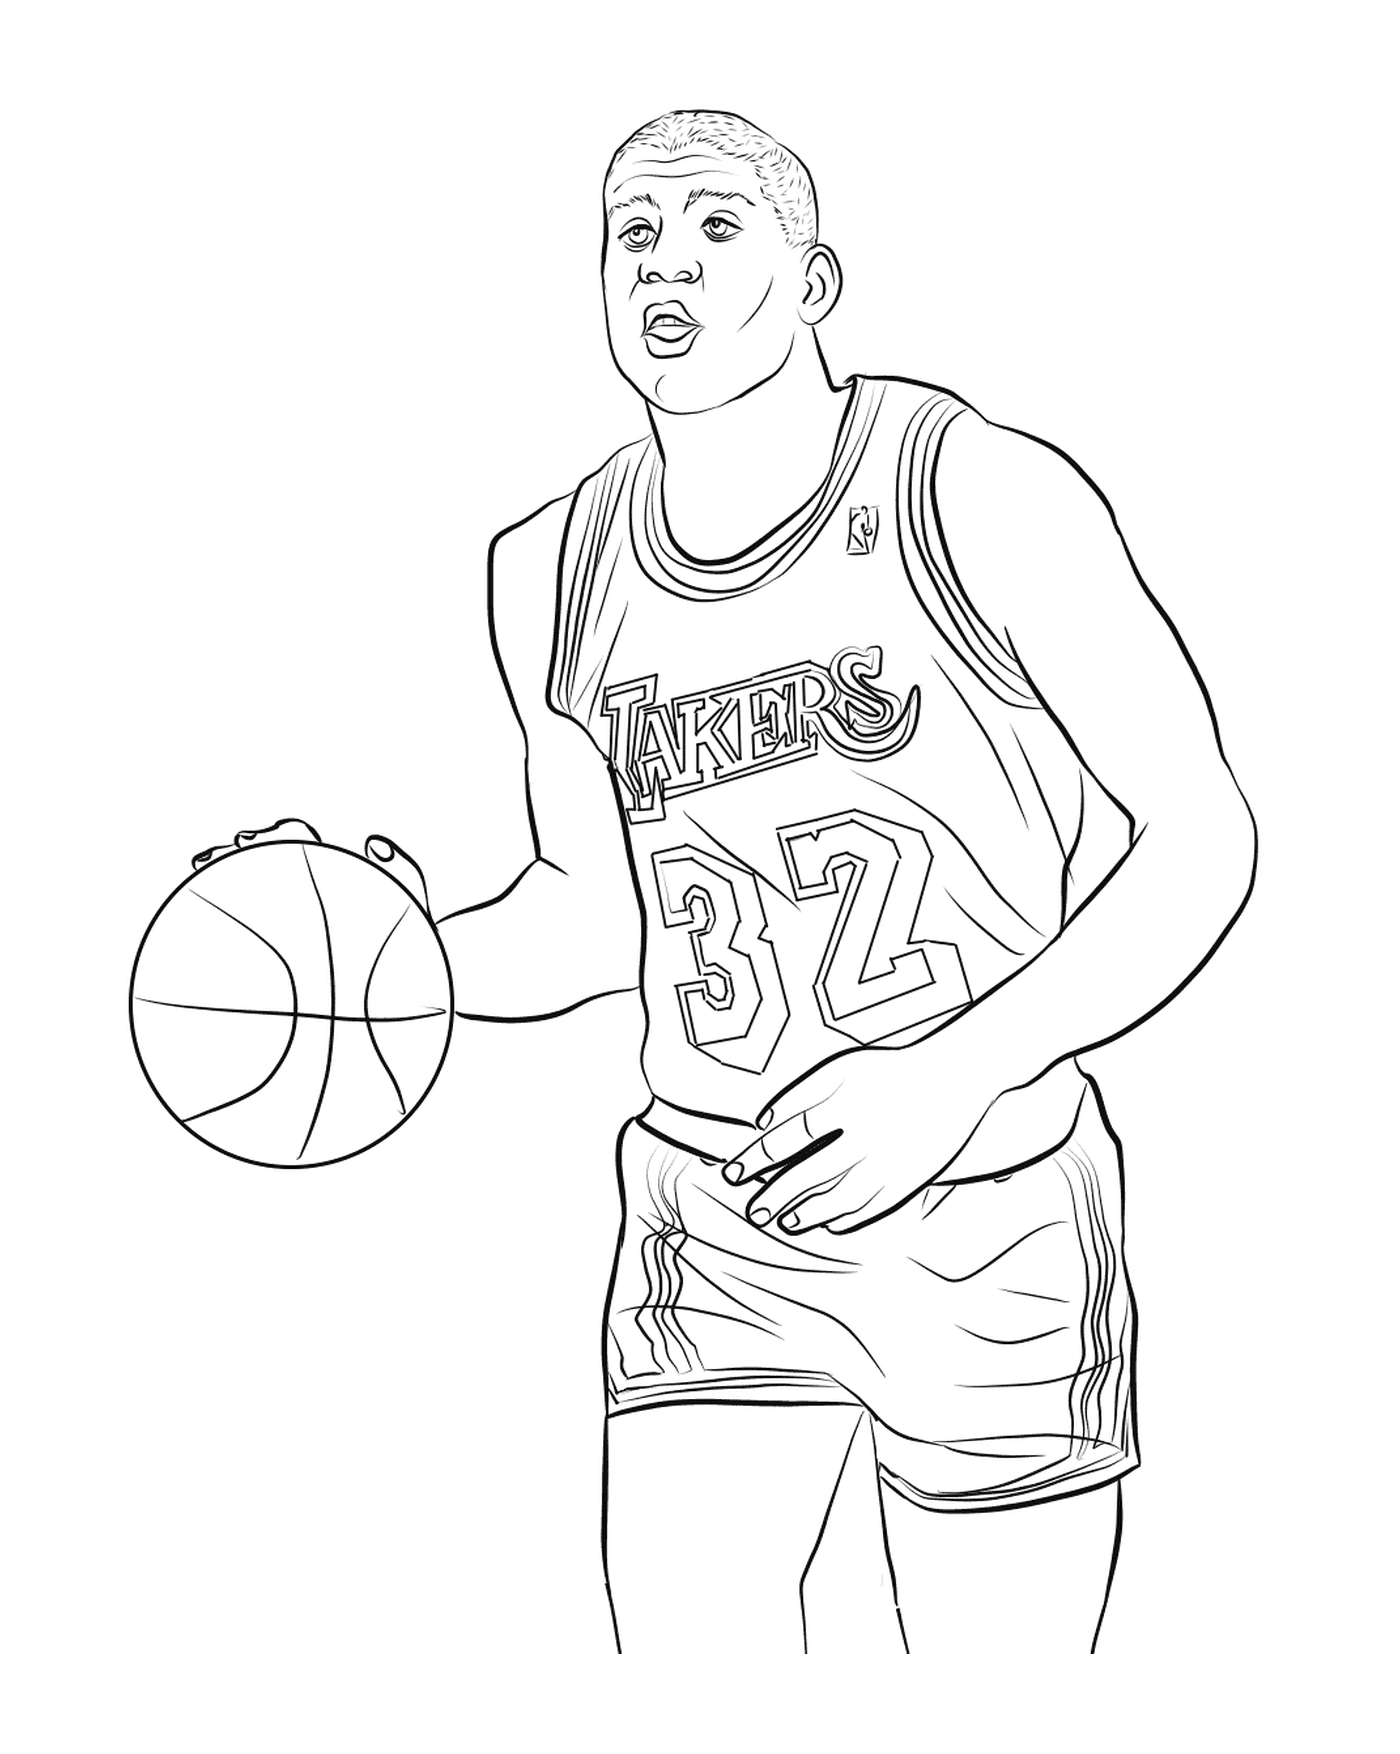  मैजिक जॉनसन, बास्केट खिलाड़ी 